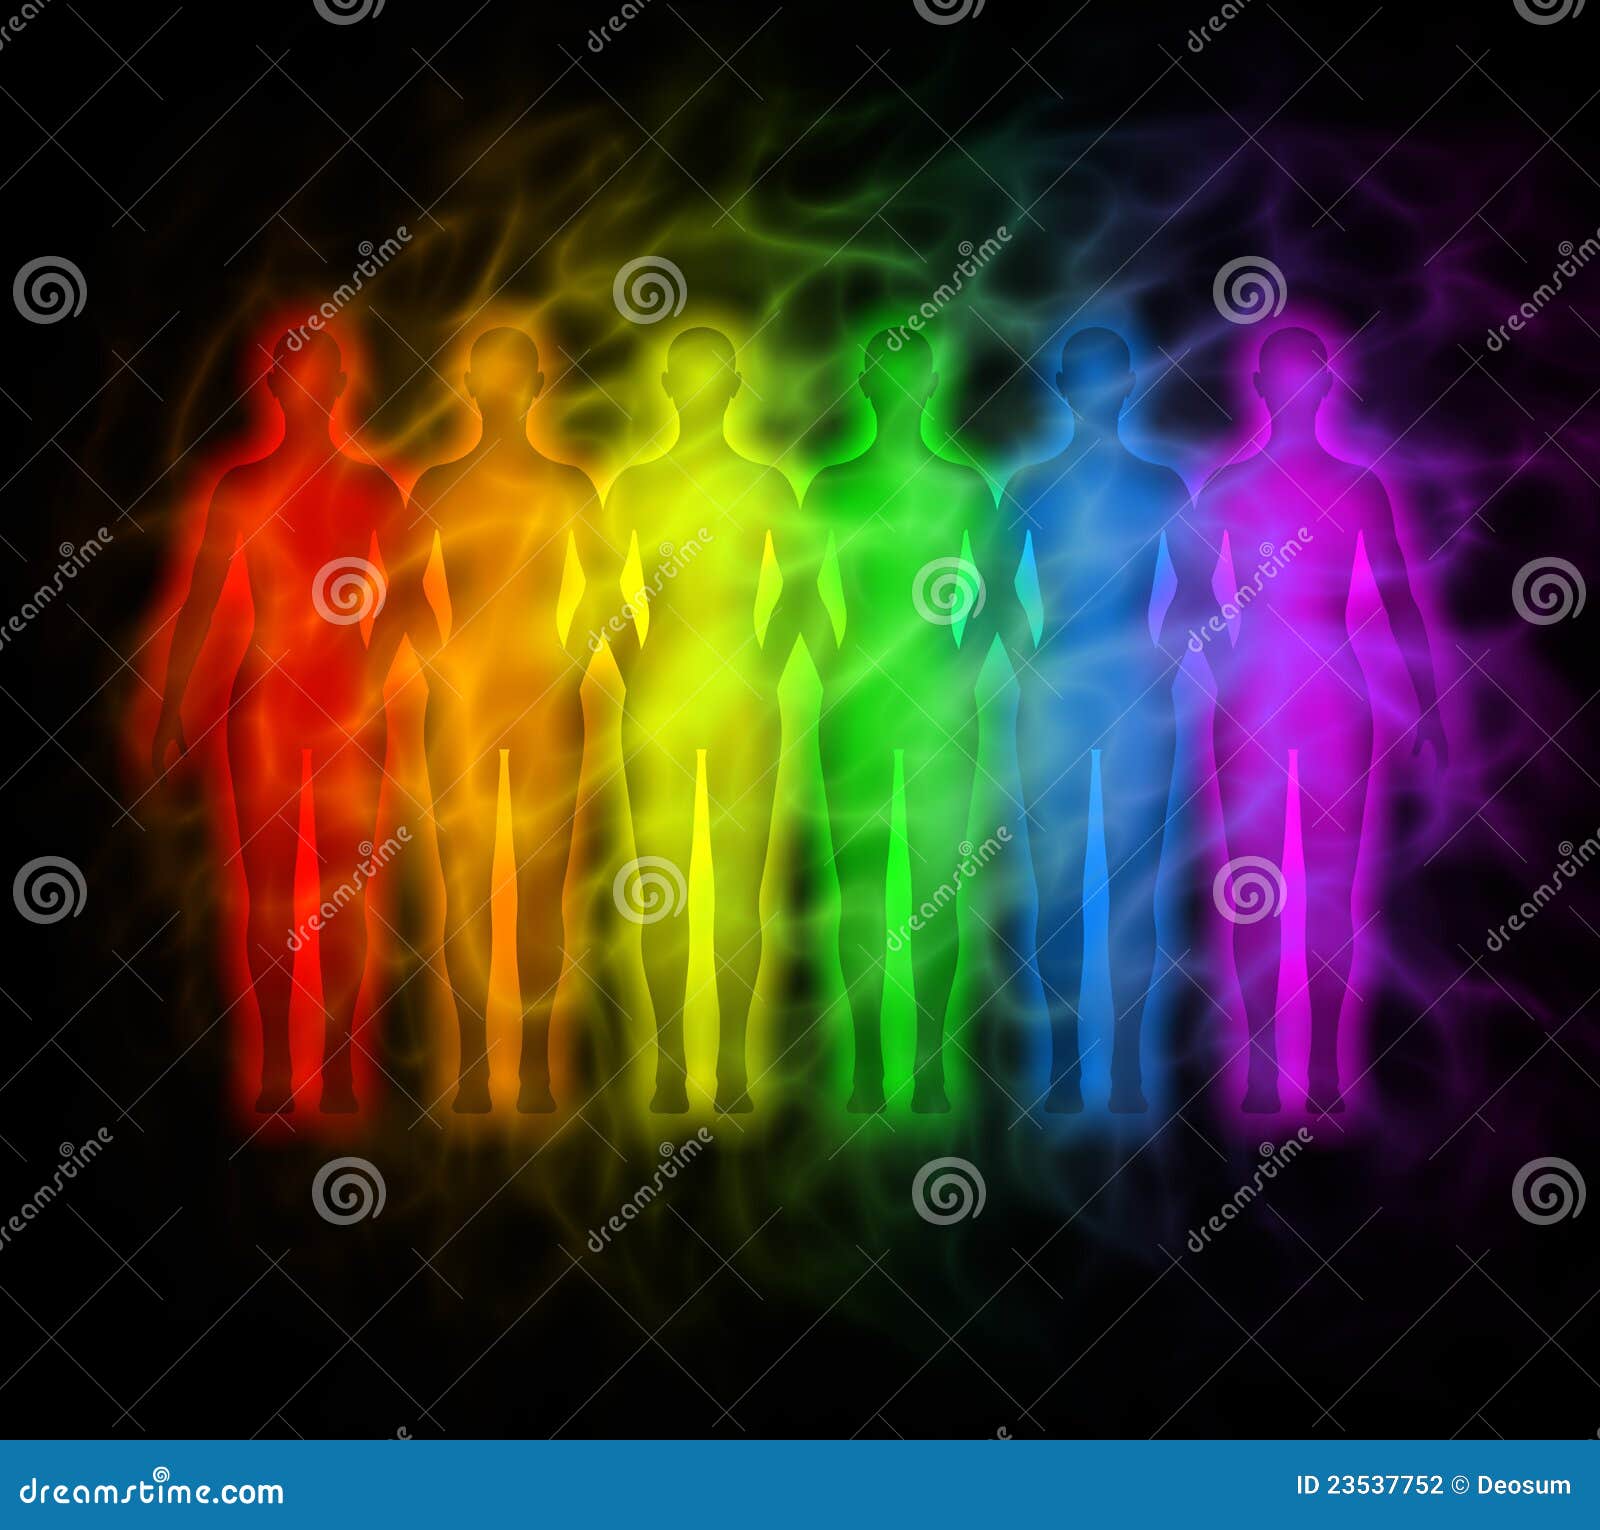 rainbow people - rainbow silhouettes of human aura